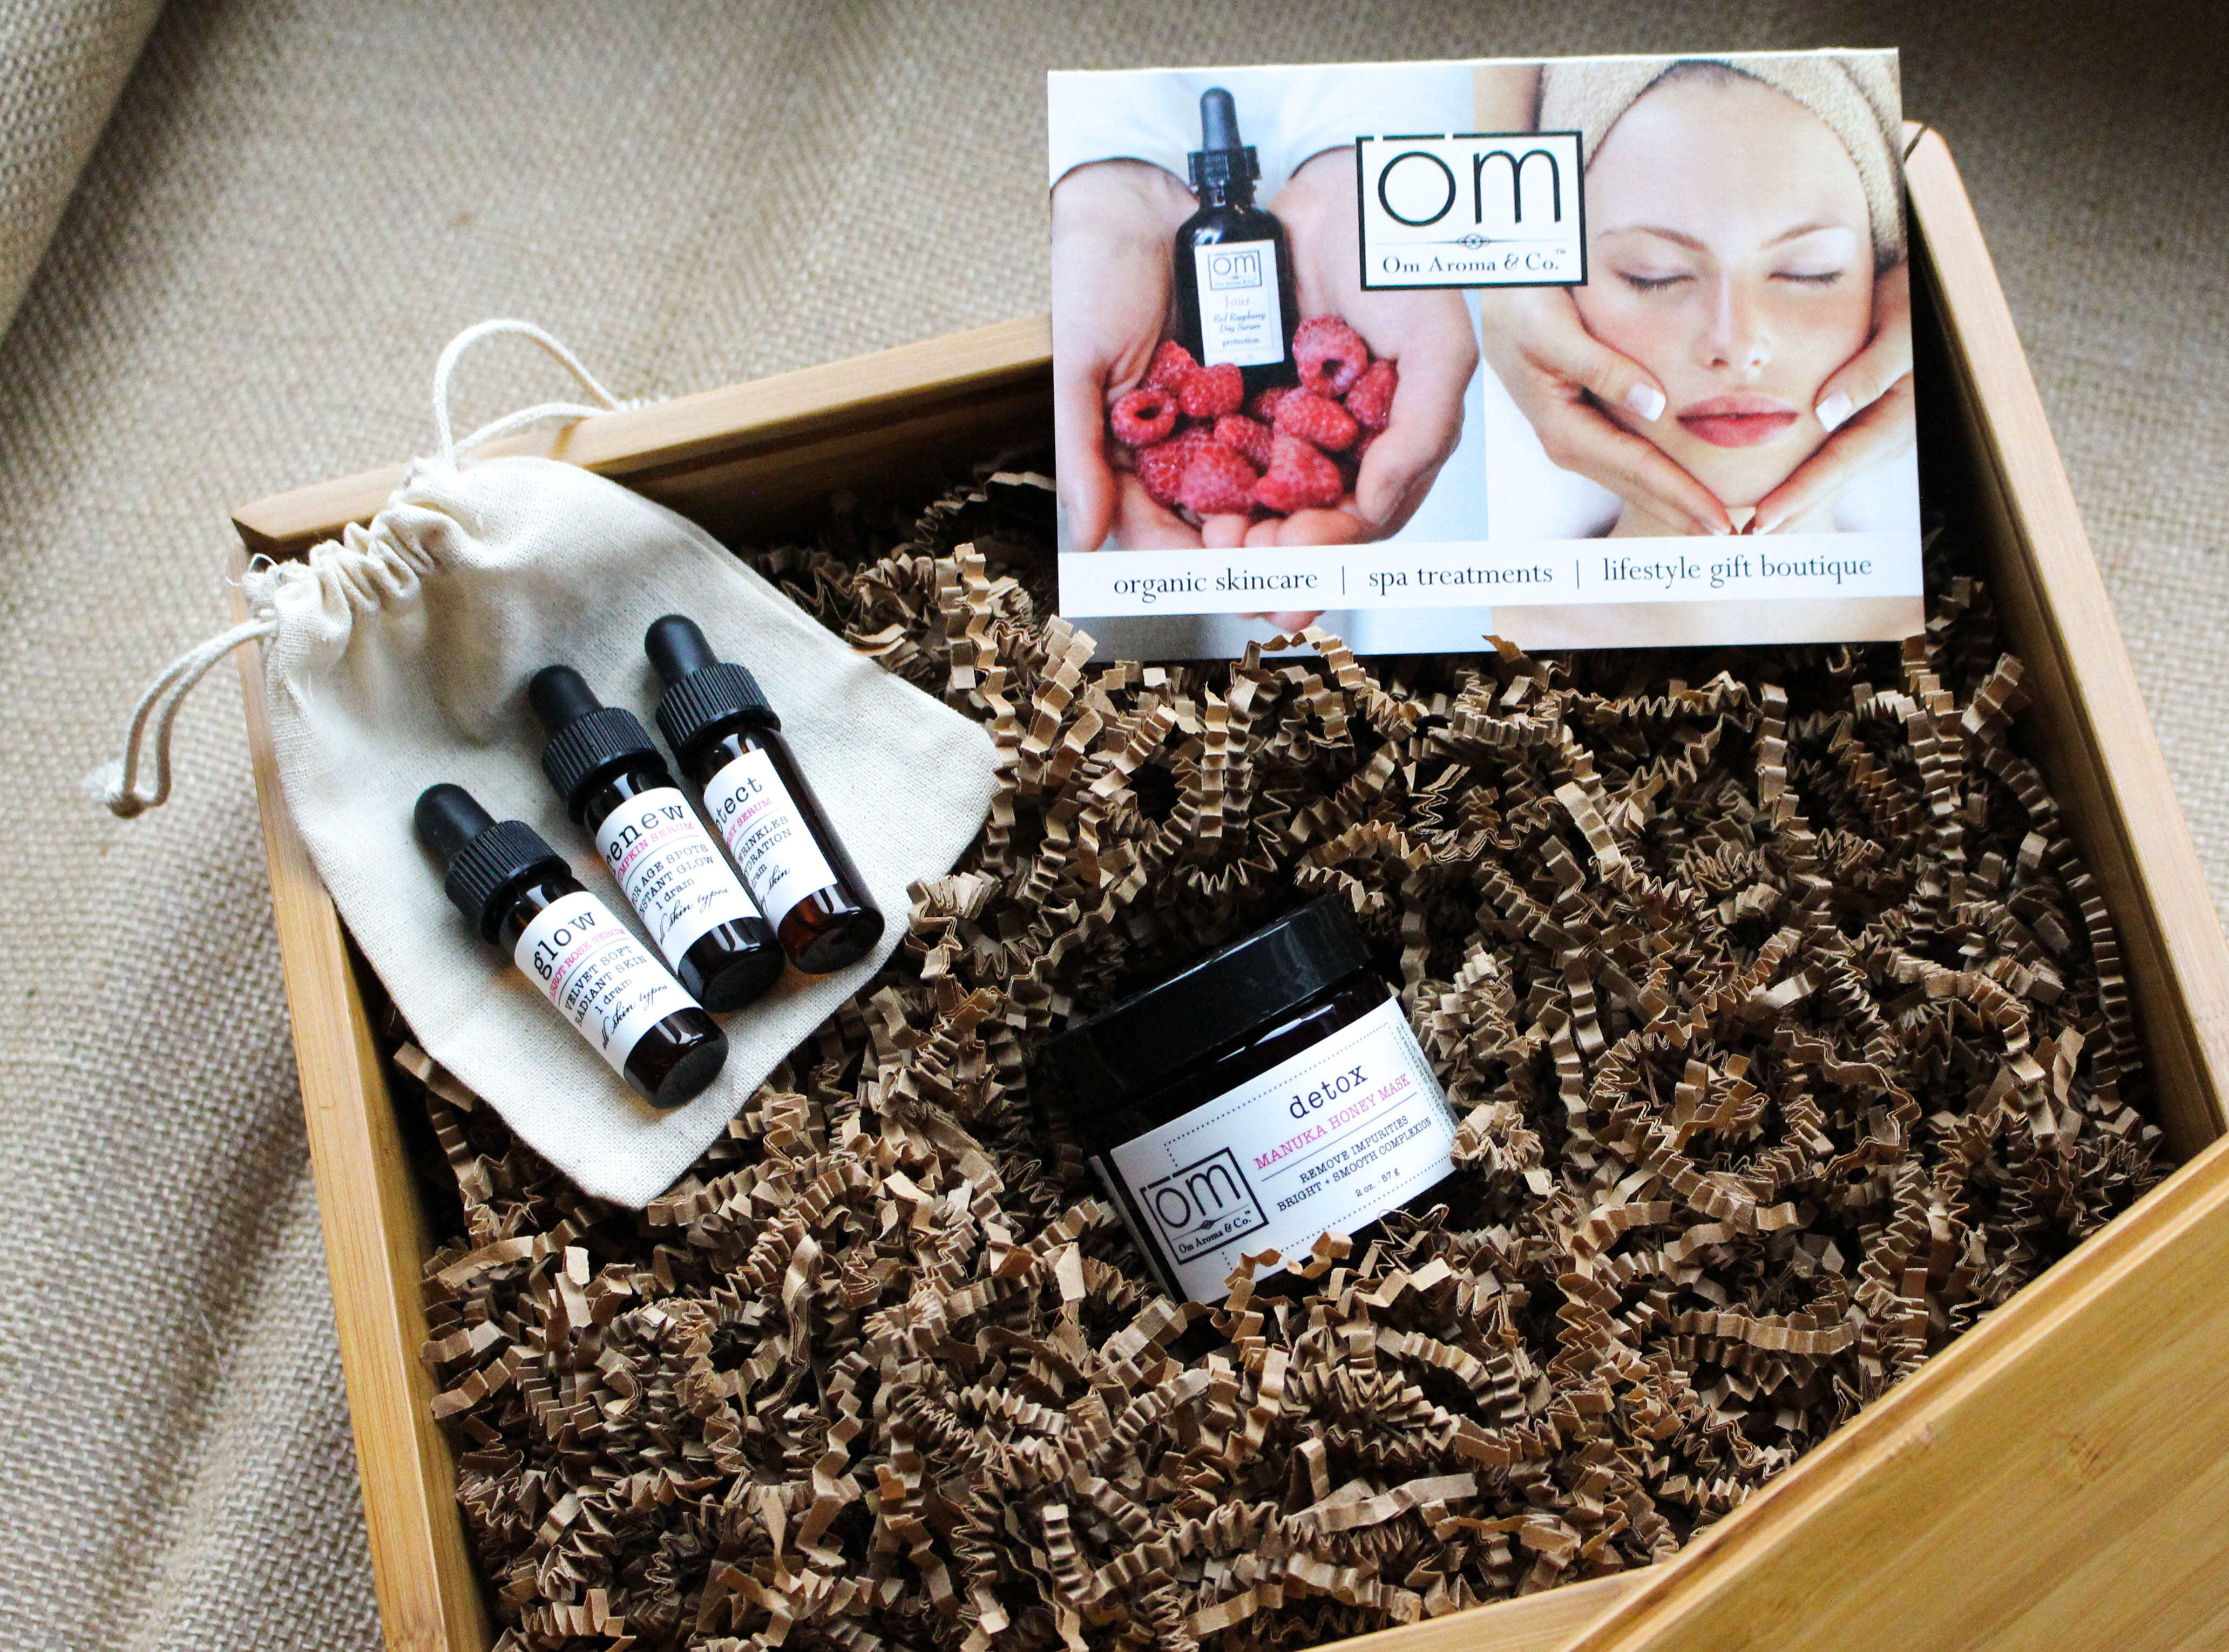 Om Aroma & Co Organic Skincare